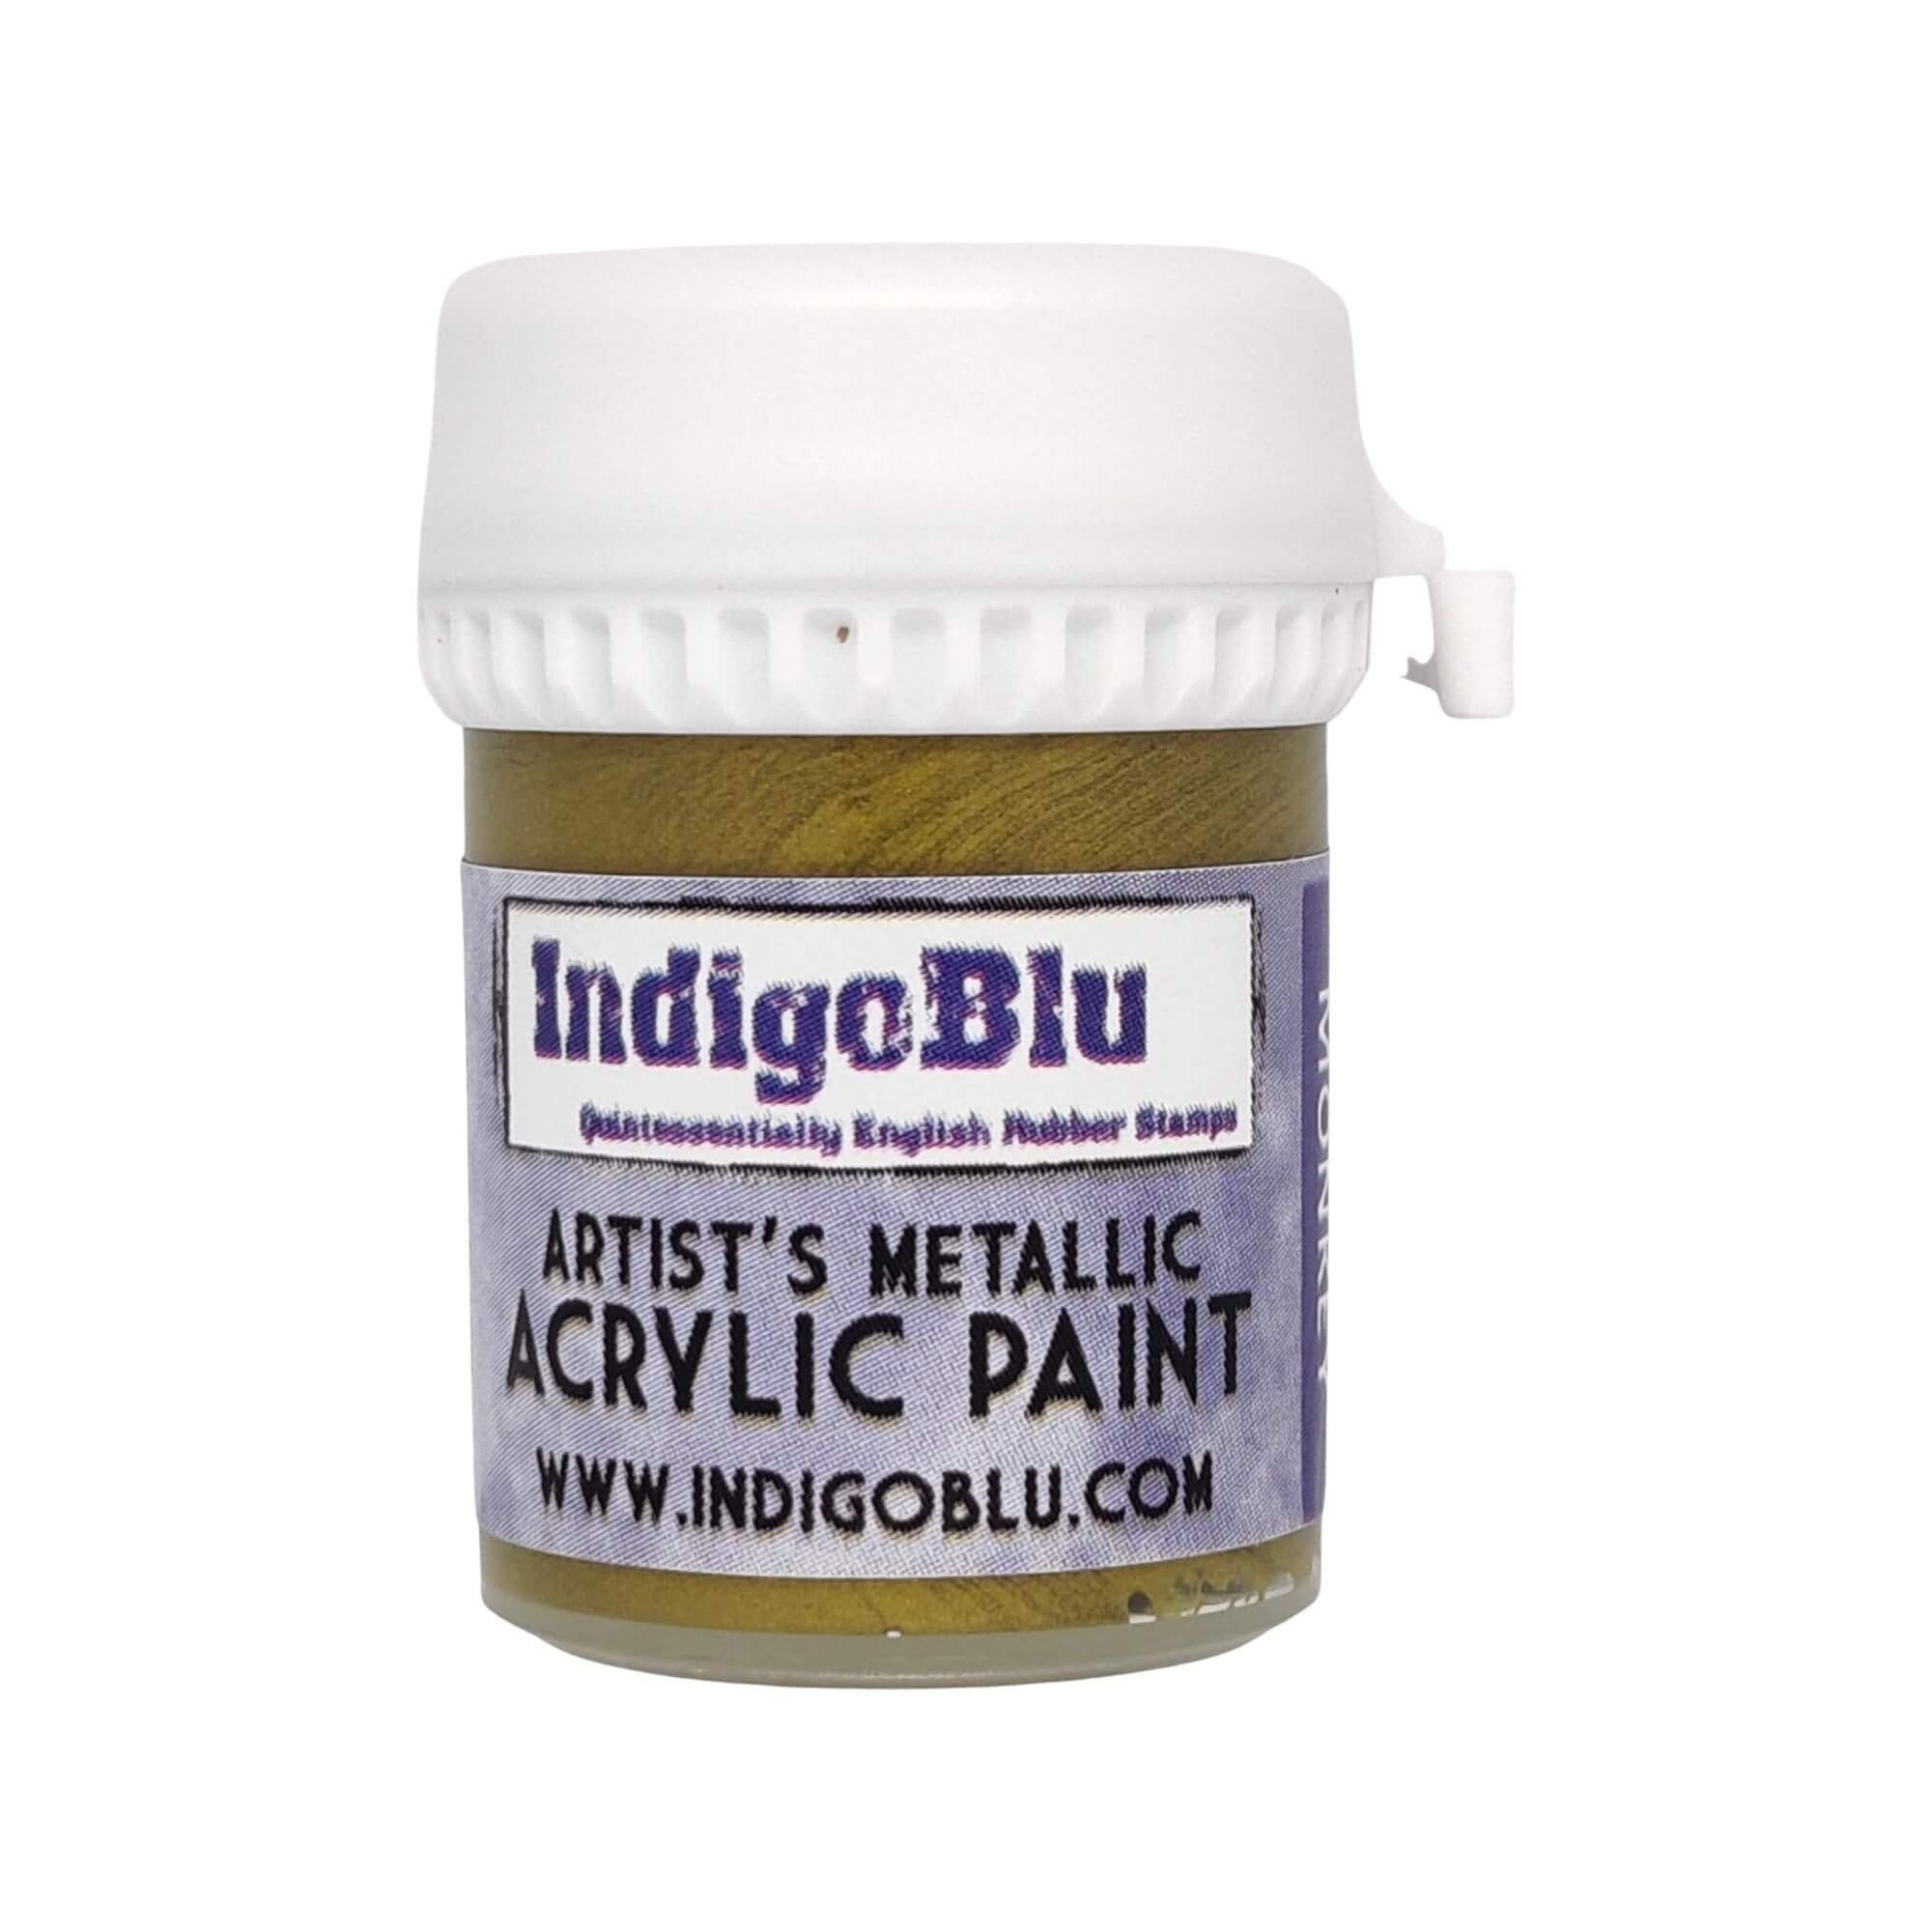 Artists Metallic Acrylic Paint - Brass Monkey (20ml) - IndigoBlu